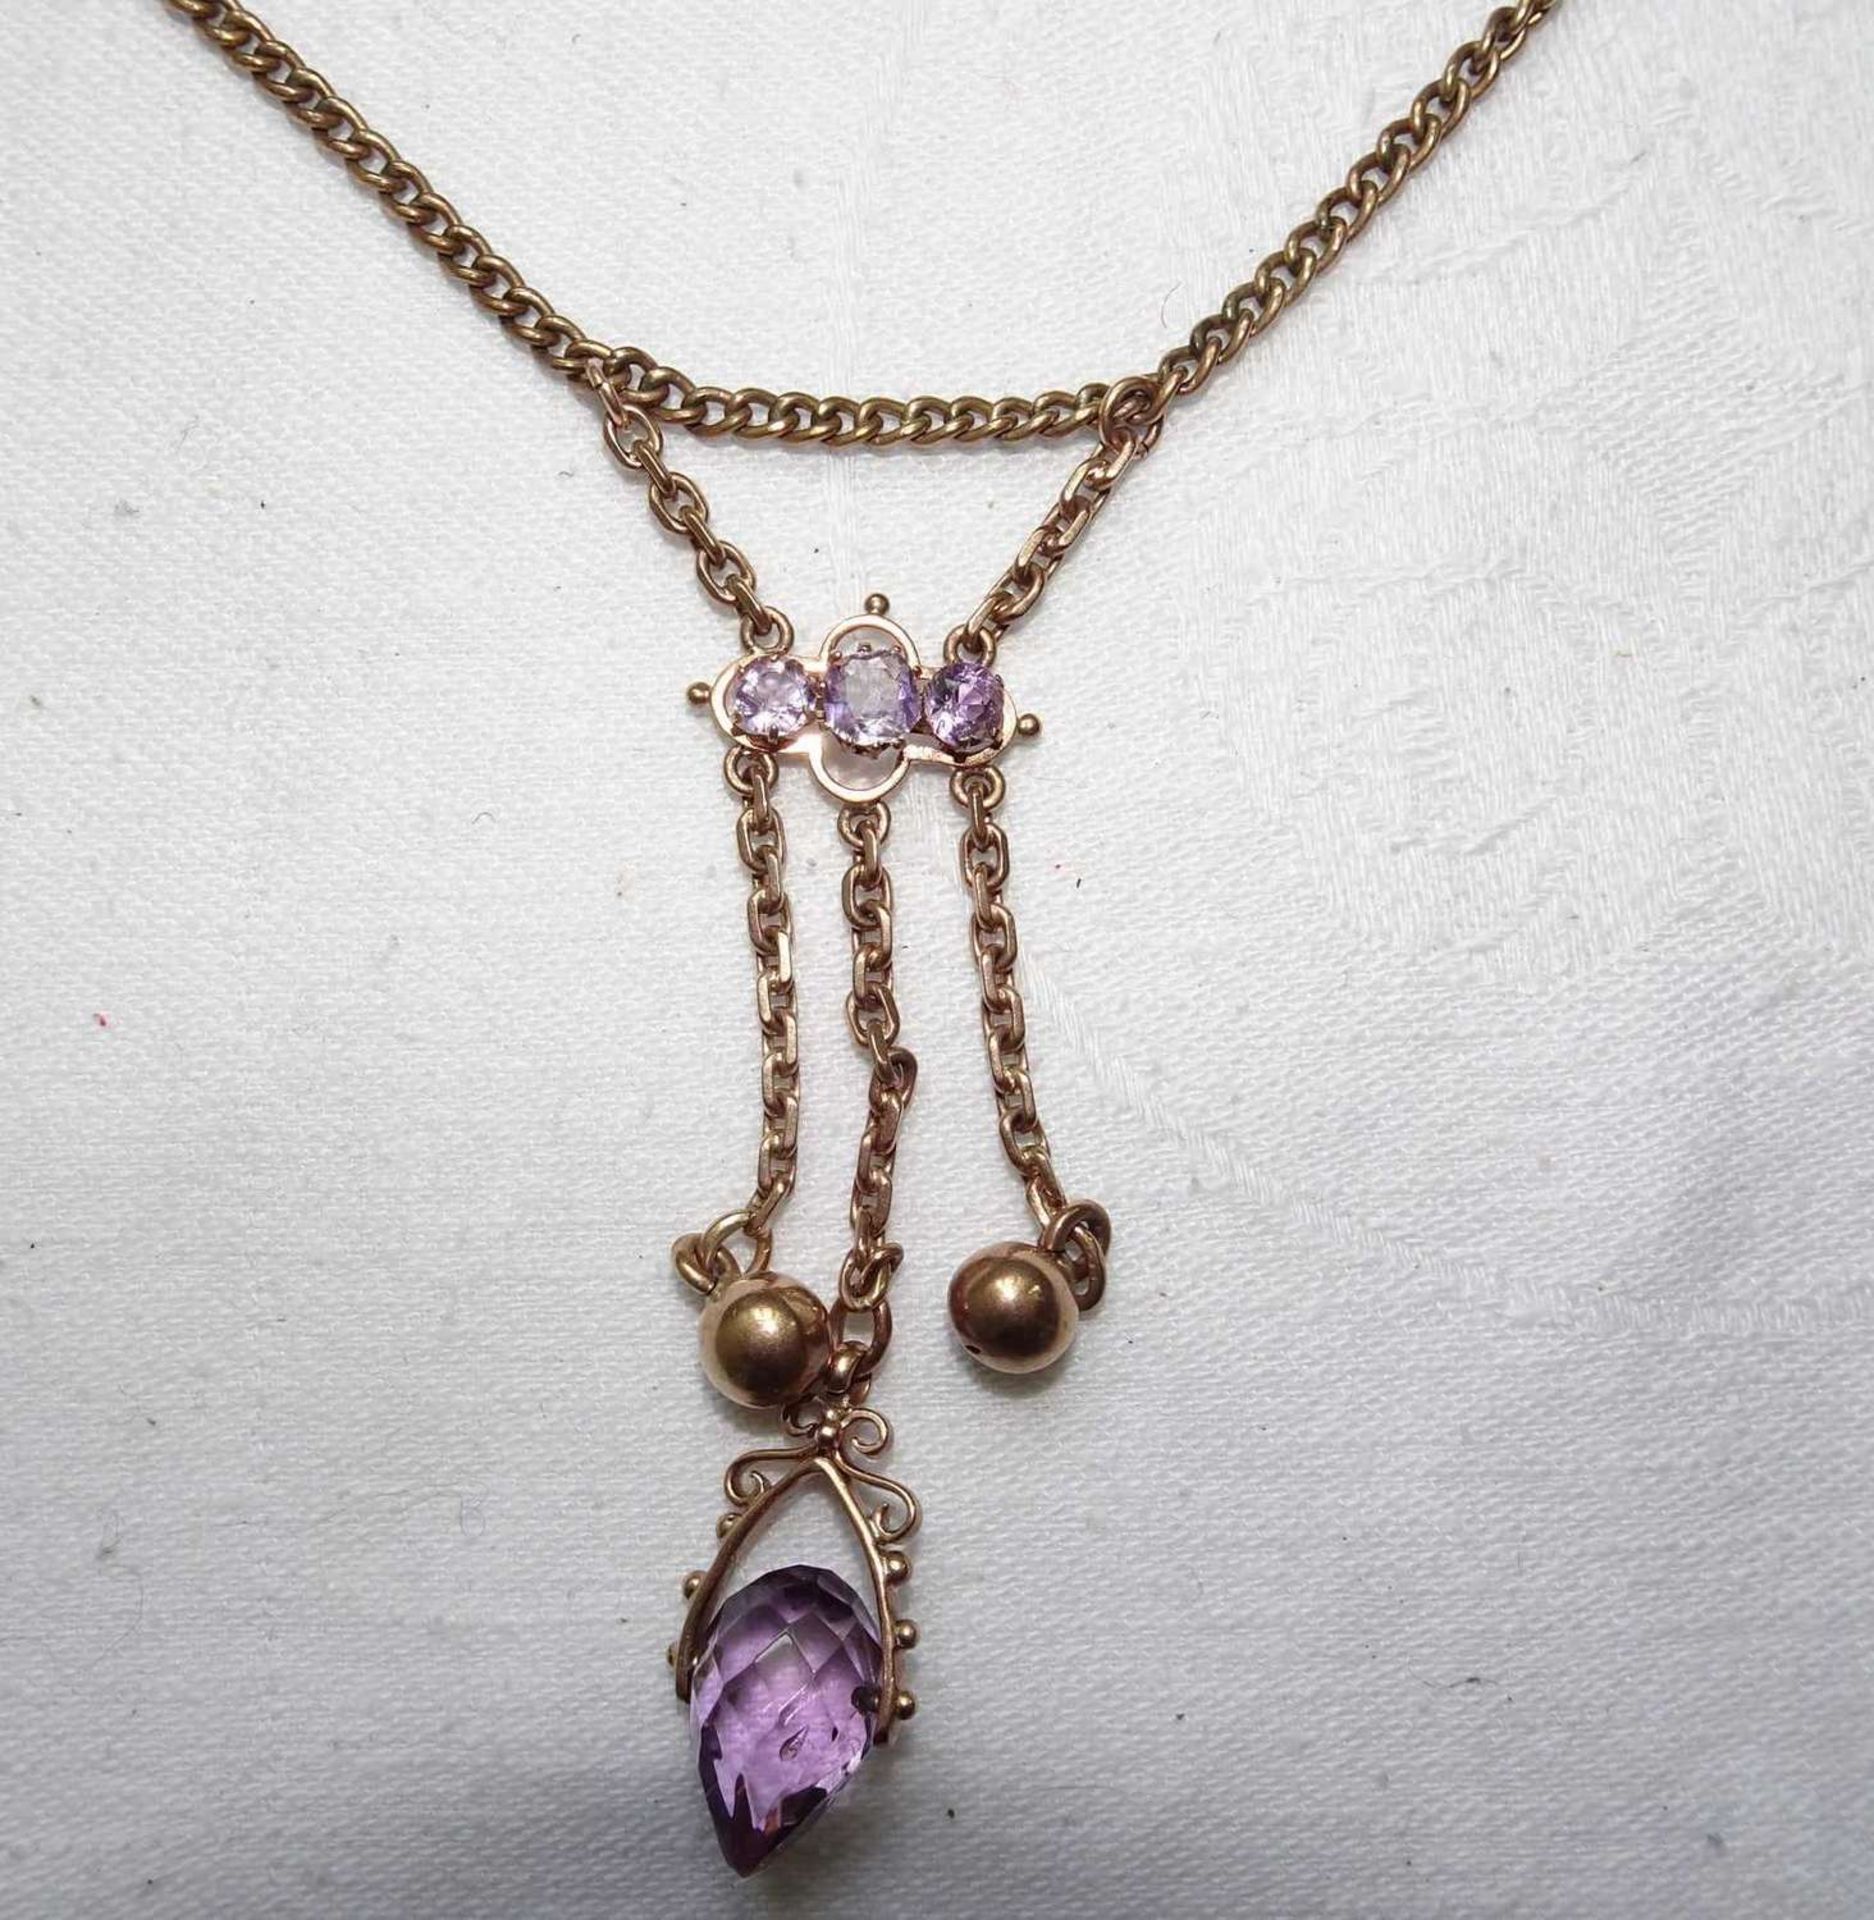 Art Nouveau necklace, with suspension. Set with amethysts. Length about 48 cmJugendstil Collier, mit - Image 2 of 3